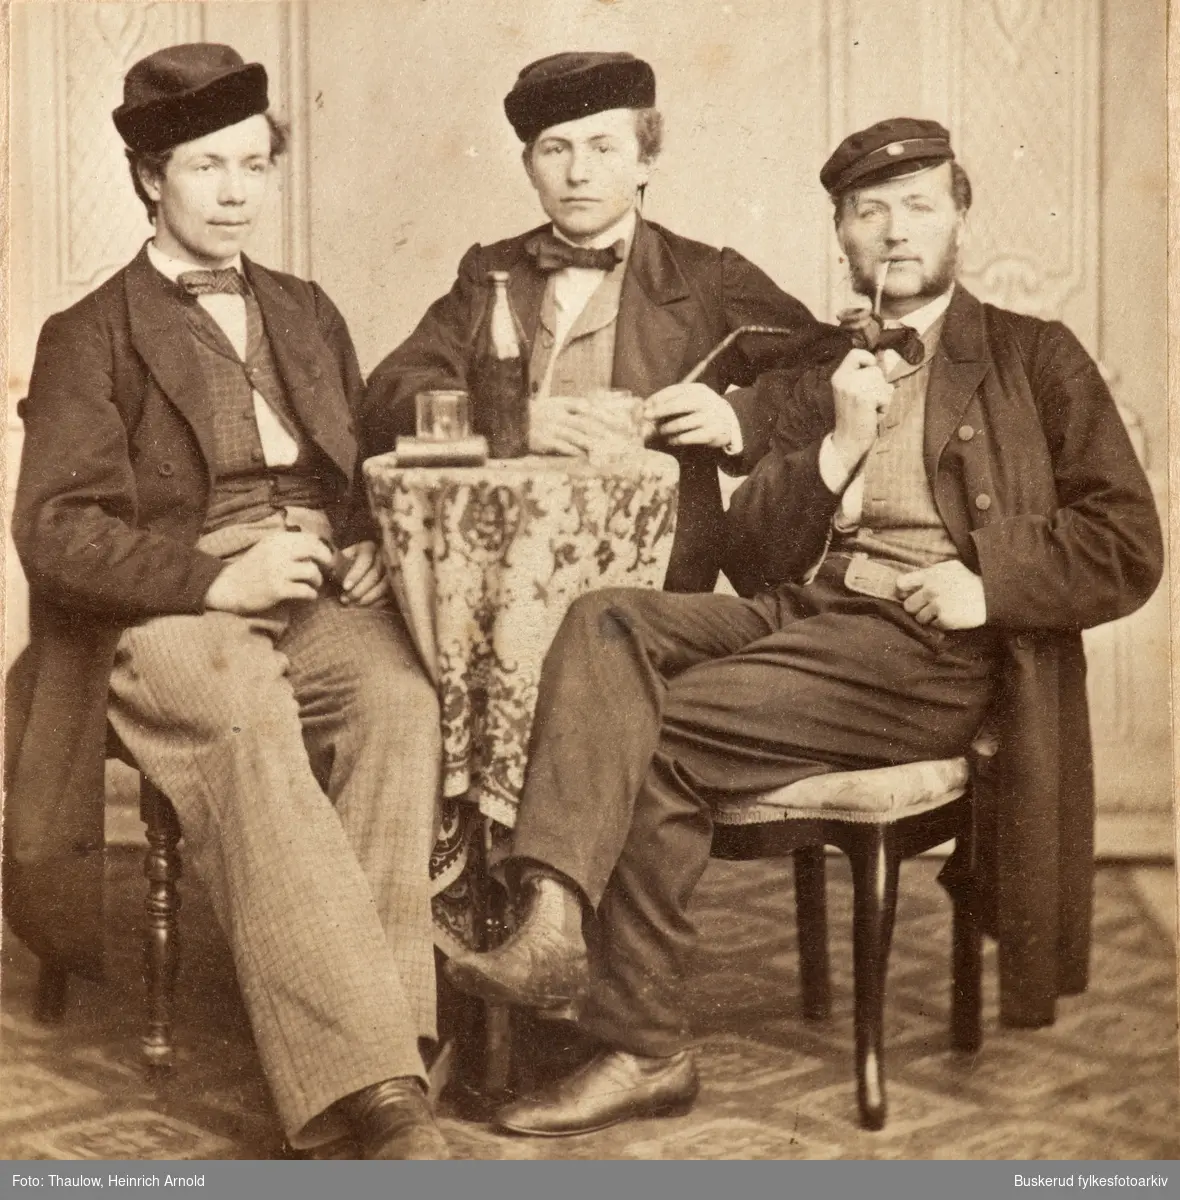 Modum Bad
St Olafsbad
Fv. August Gregersen, Nils Thaulow, Heinrich Arnold Thaulow
1864